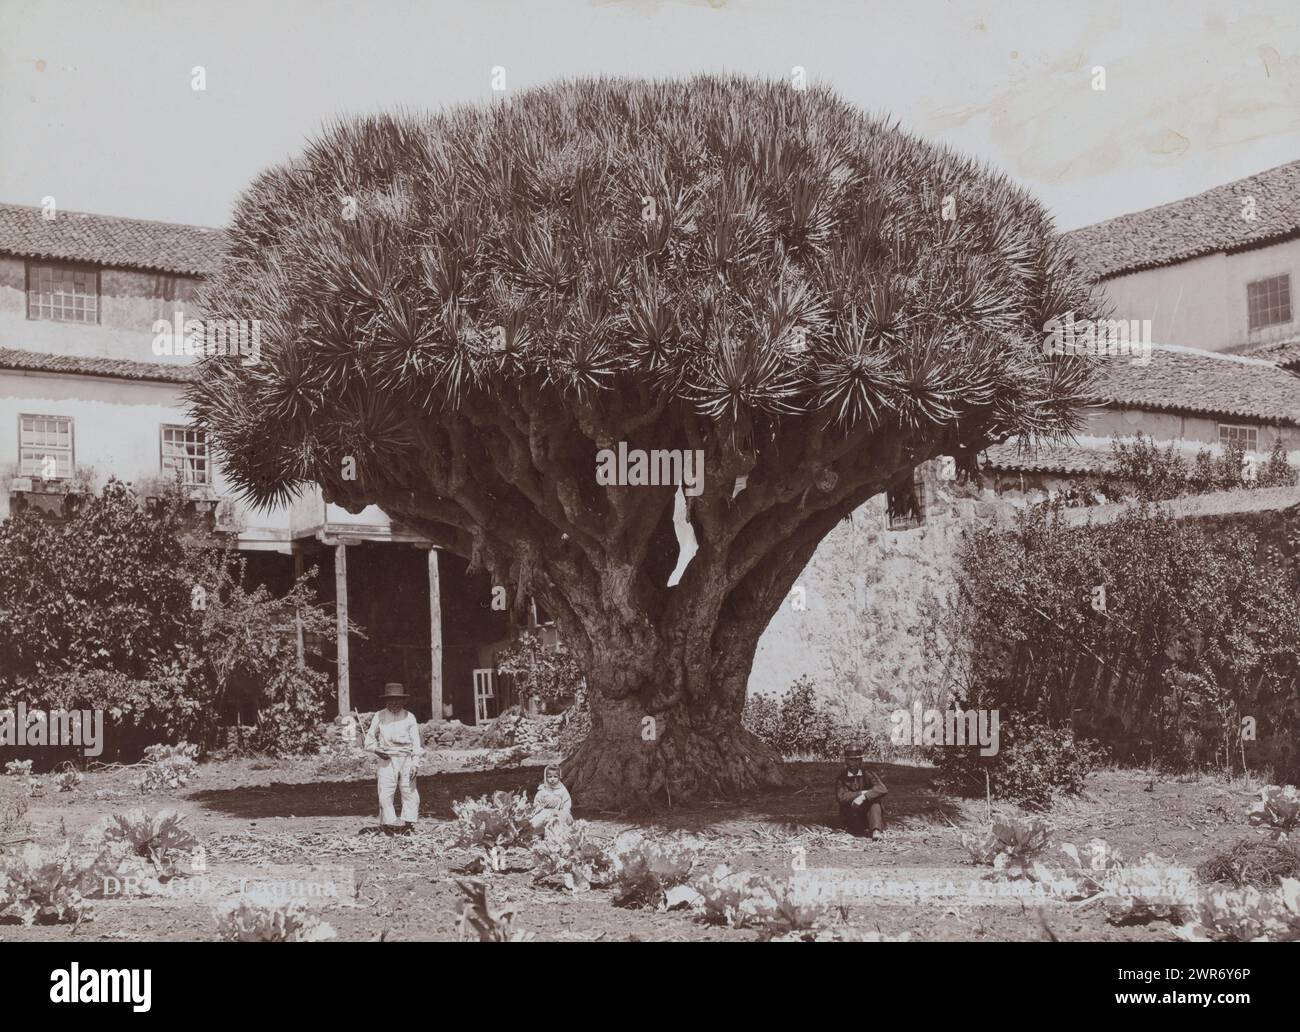 Three people under a dragon tree, Tenerife, Drago Laguna (title on object), Fotografia Alemana, Tenerife, 1880 - 1910, baryta paper, height 162 mm × width 221 mm, photograph Stock Photo